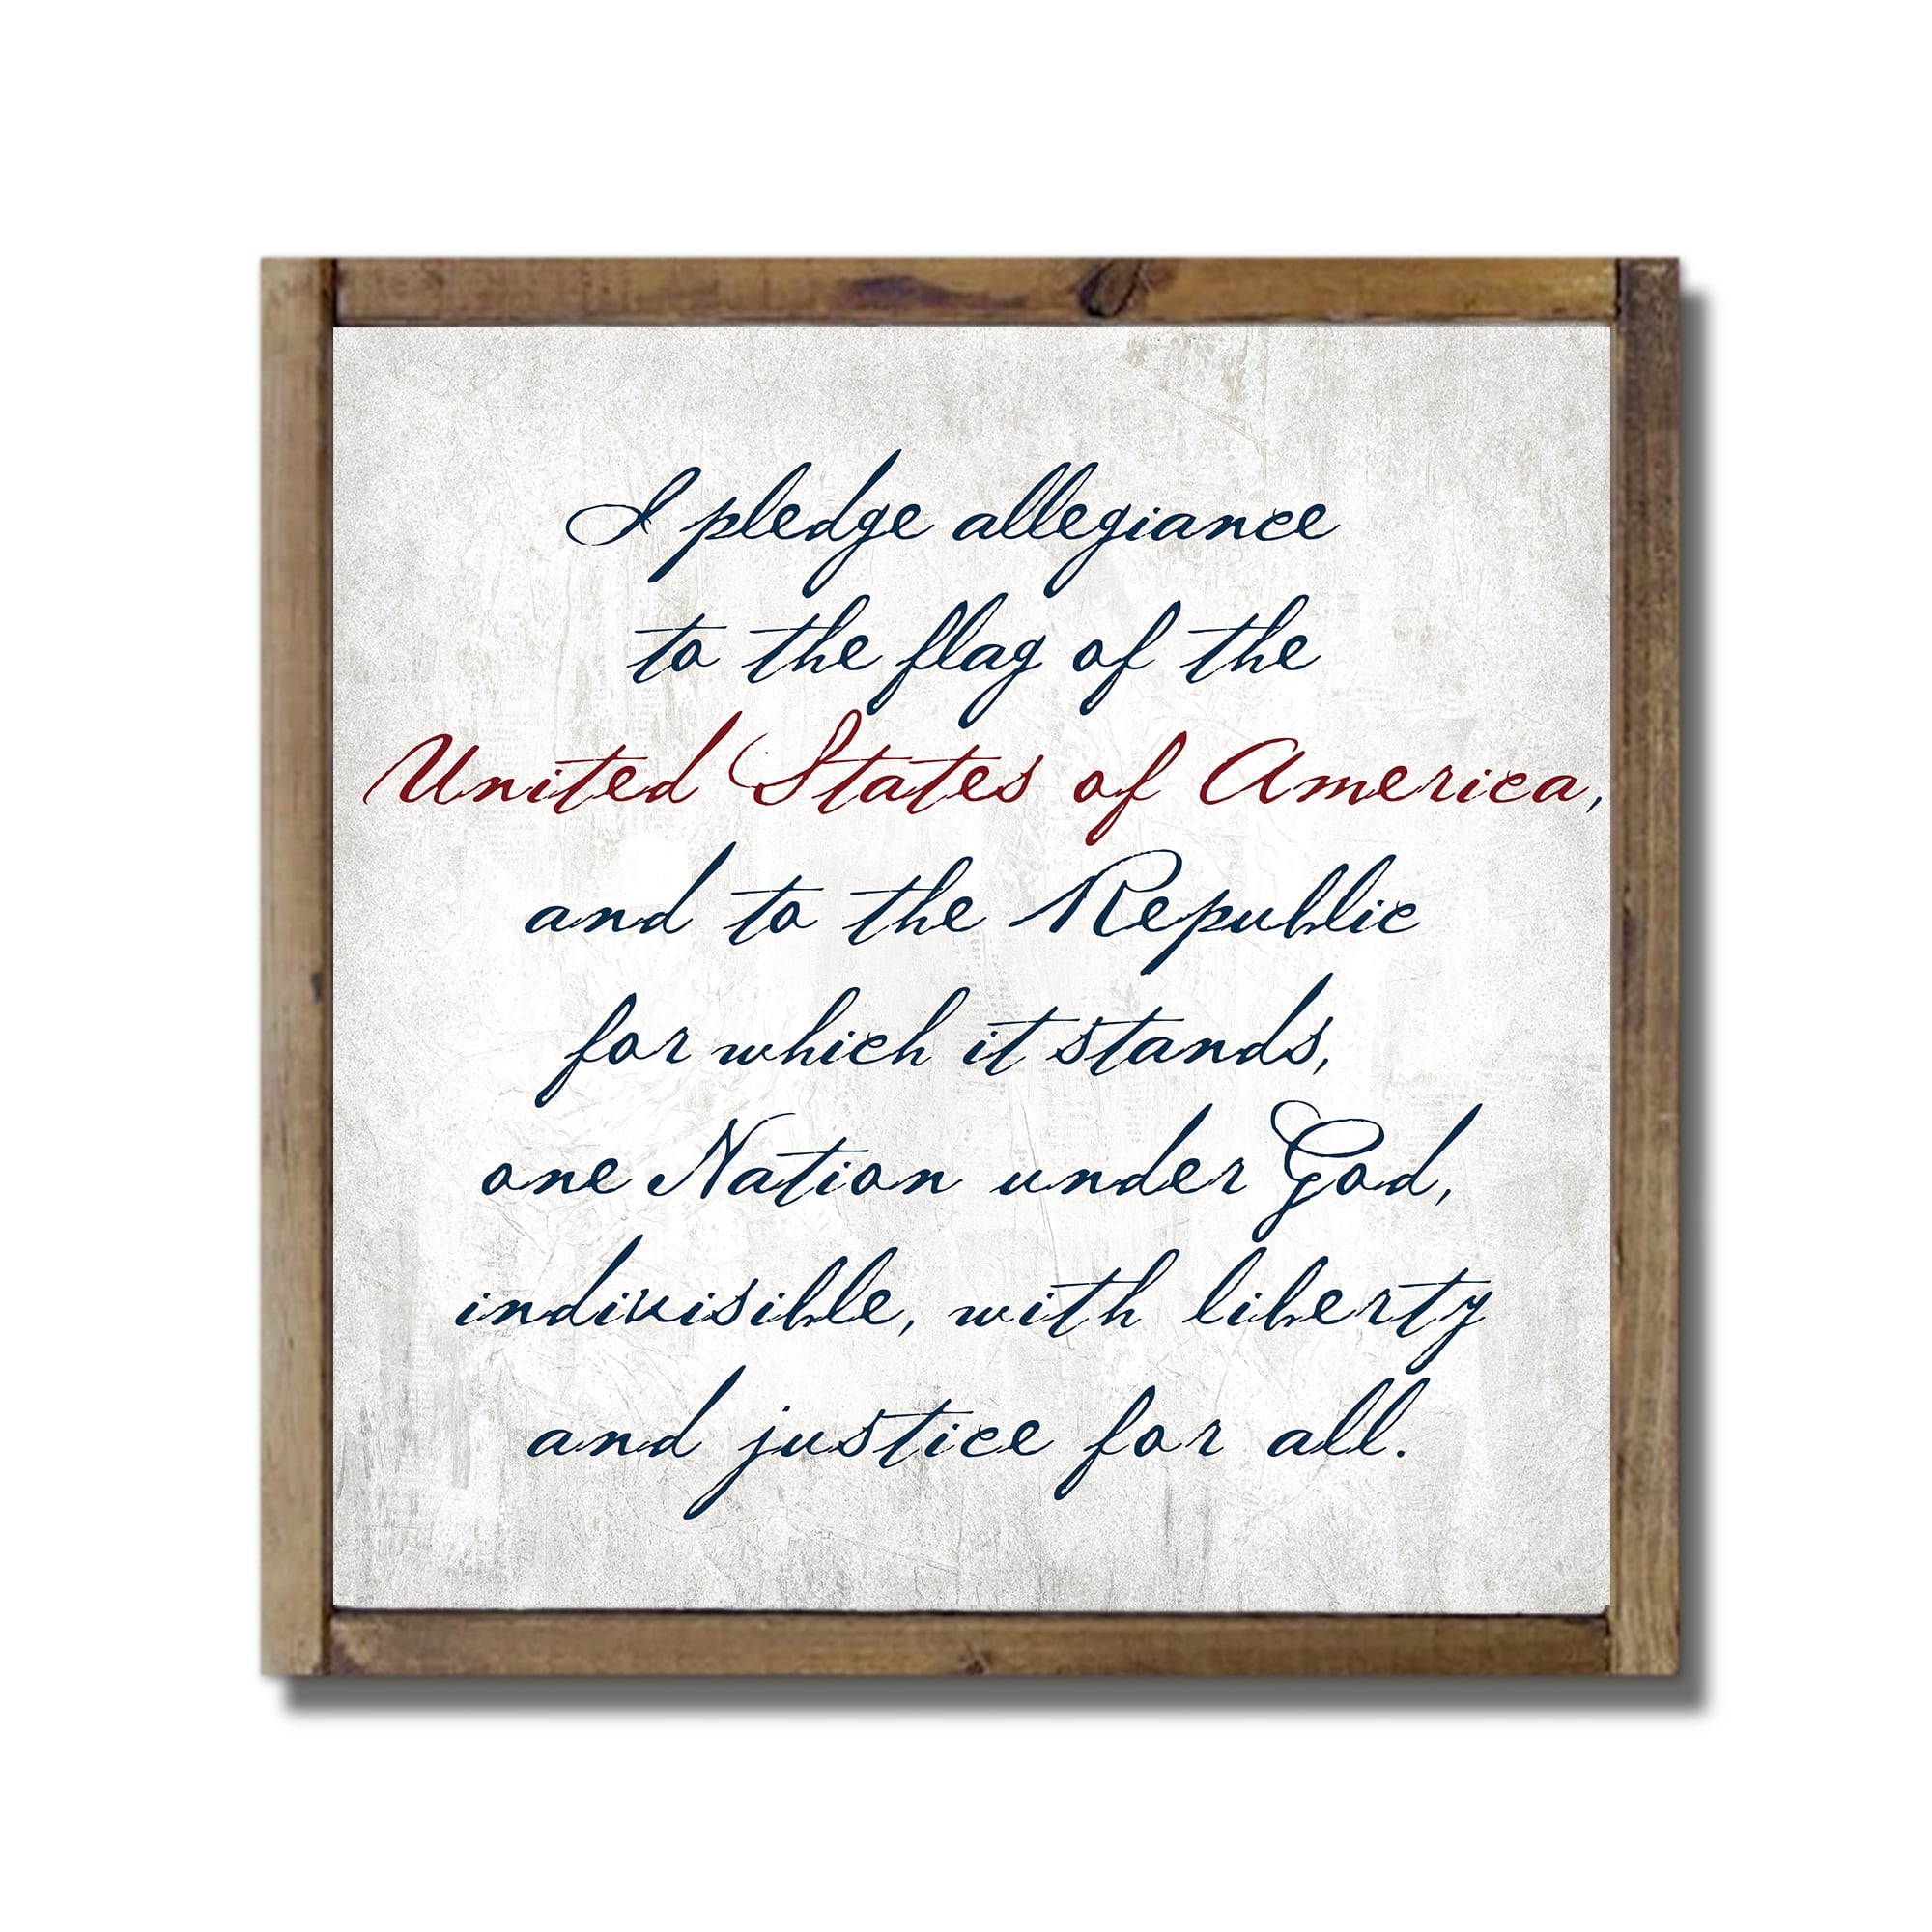 Script Pledge of Allegiance Framed Wood Plaque